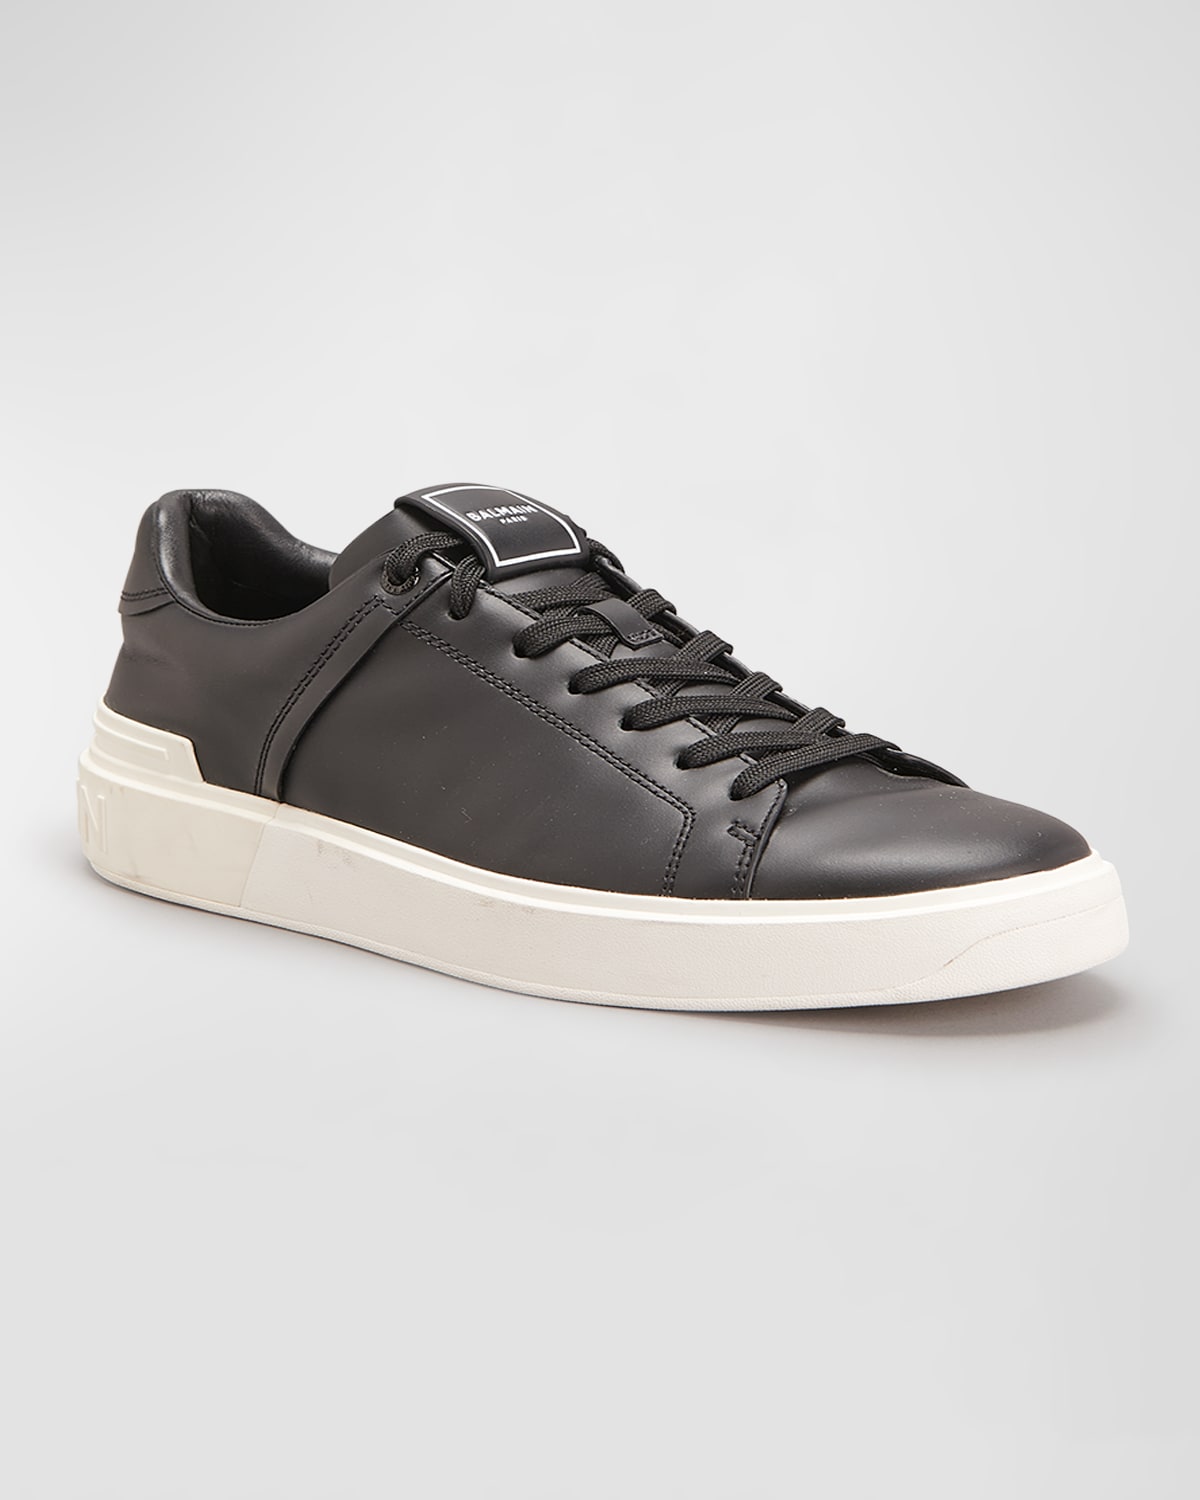 Balmain Men's B-court Leather Low-top Sneakers In Black/white